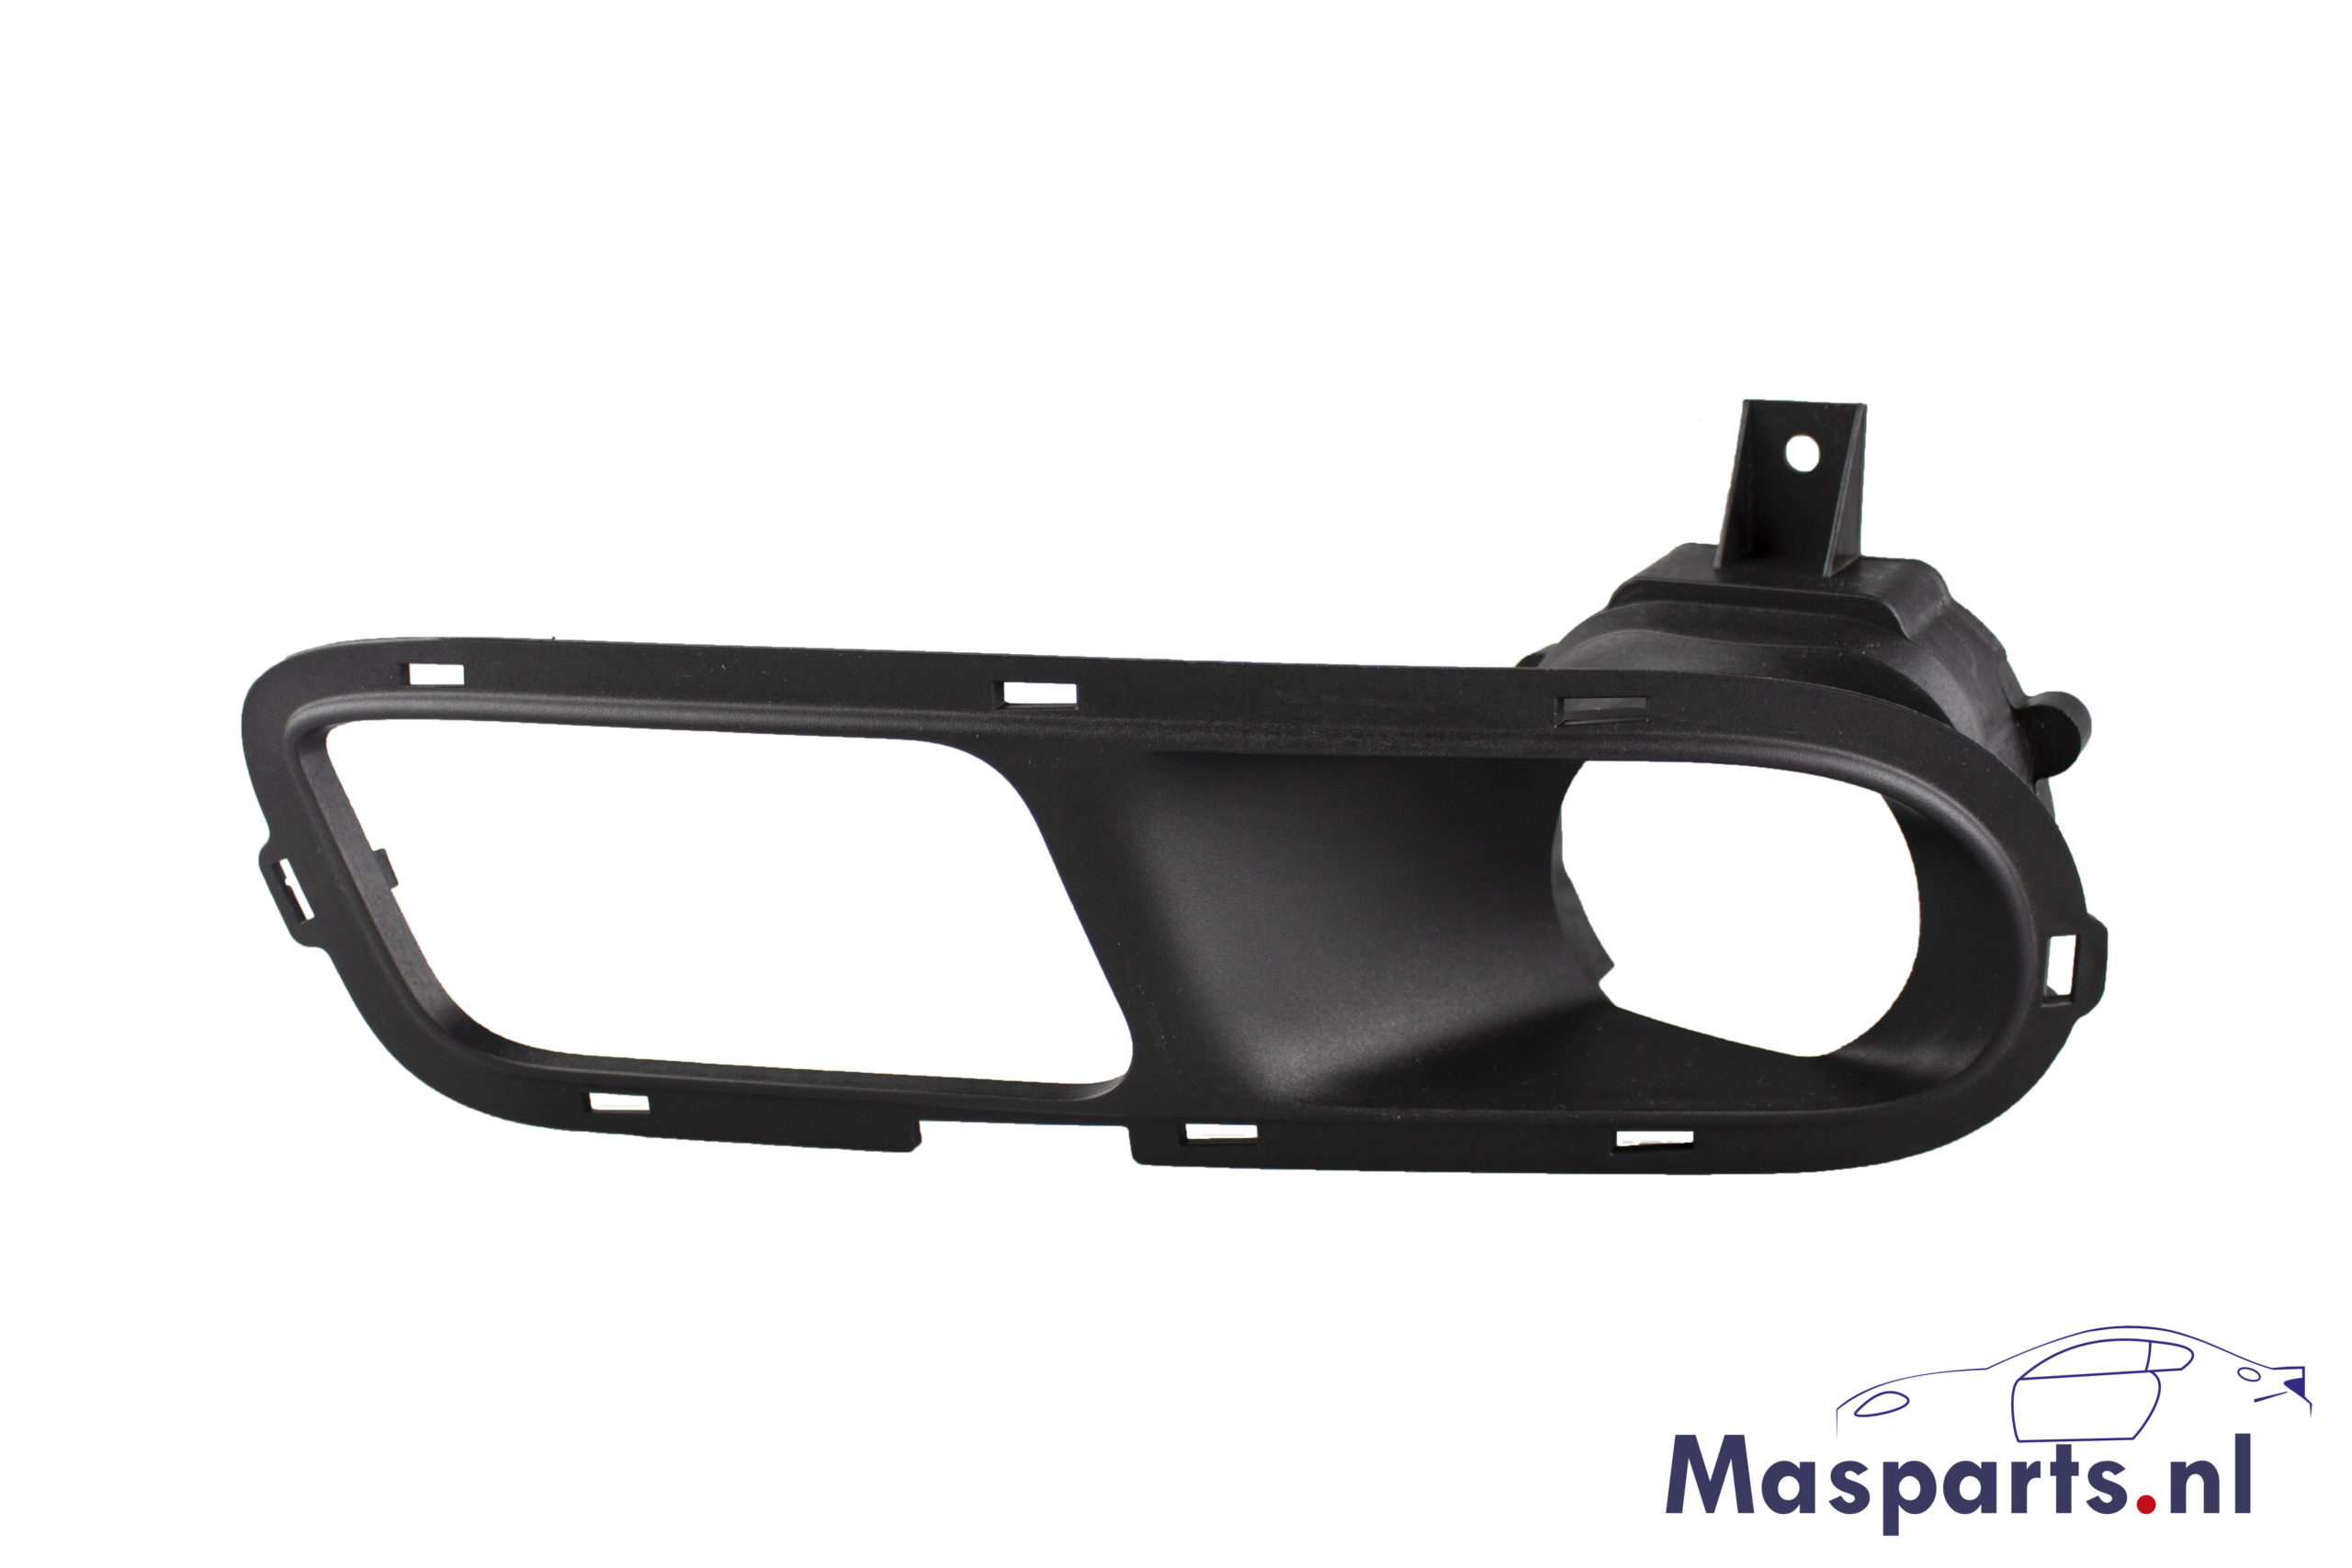 Maserati Fog Headlight Plate DX (RH) 80049900